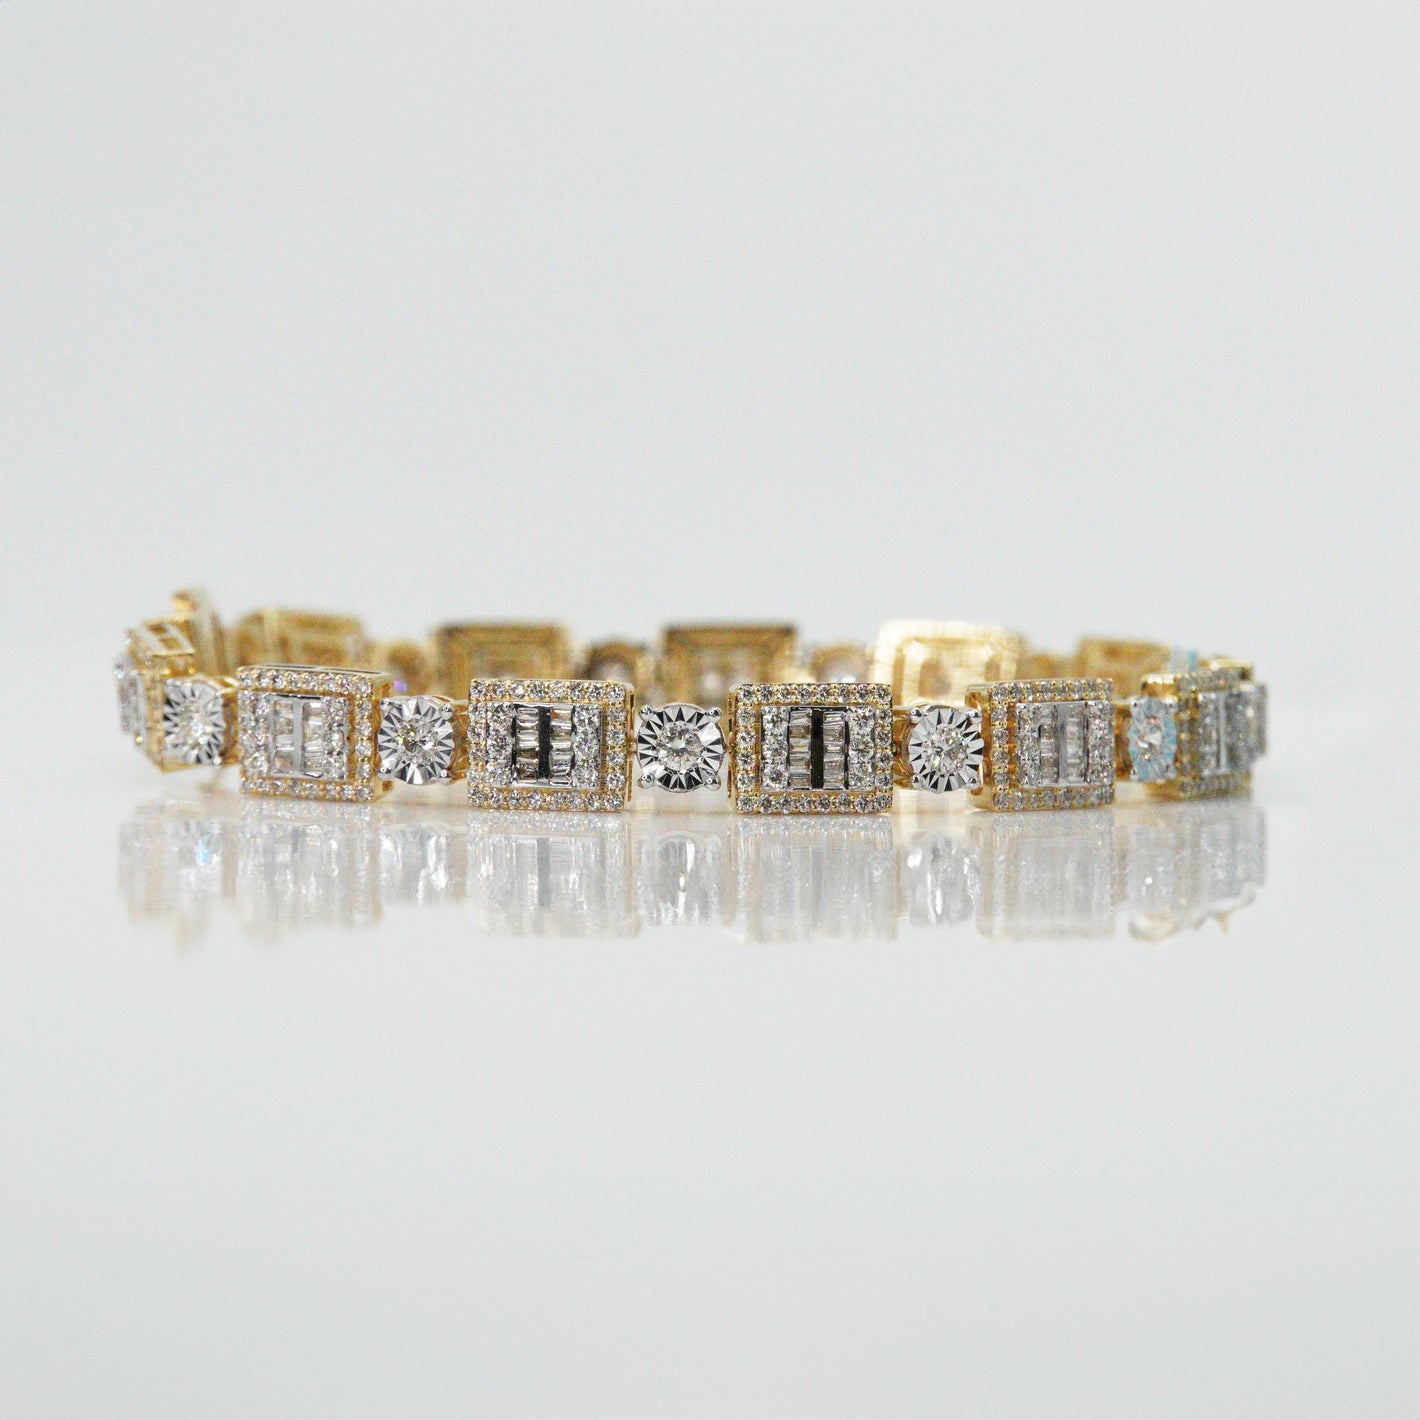 10k Solid Gold VS1 Baguette Diamond Tennis Bracelet